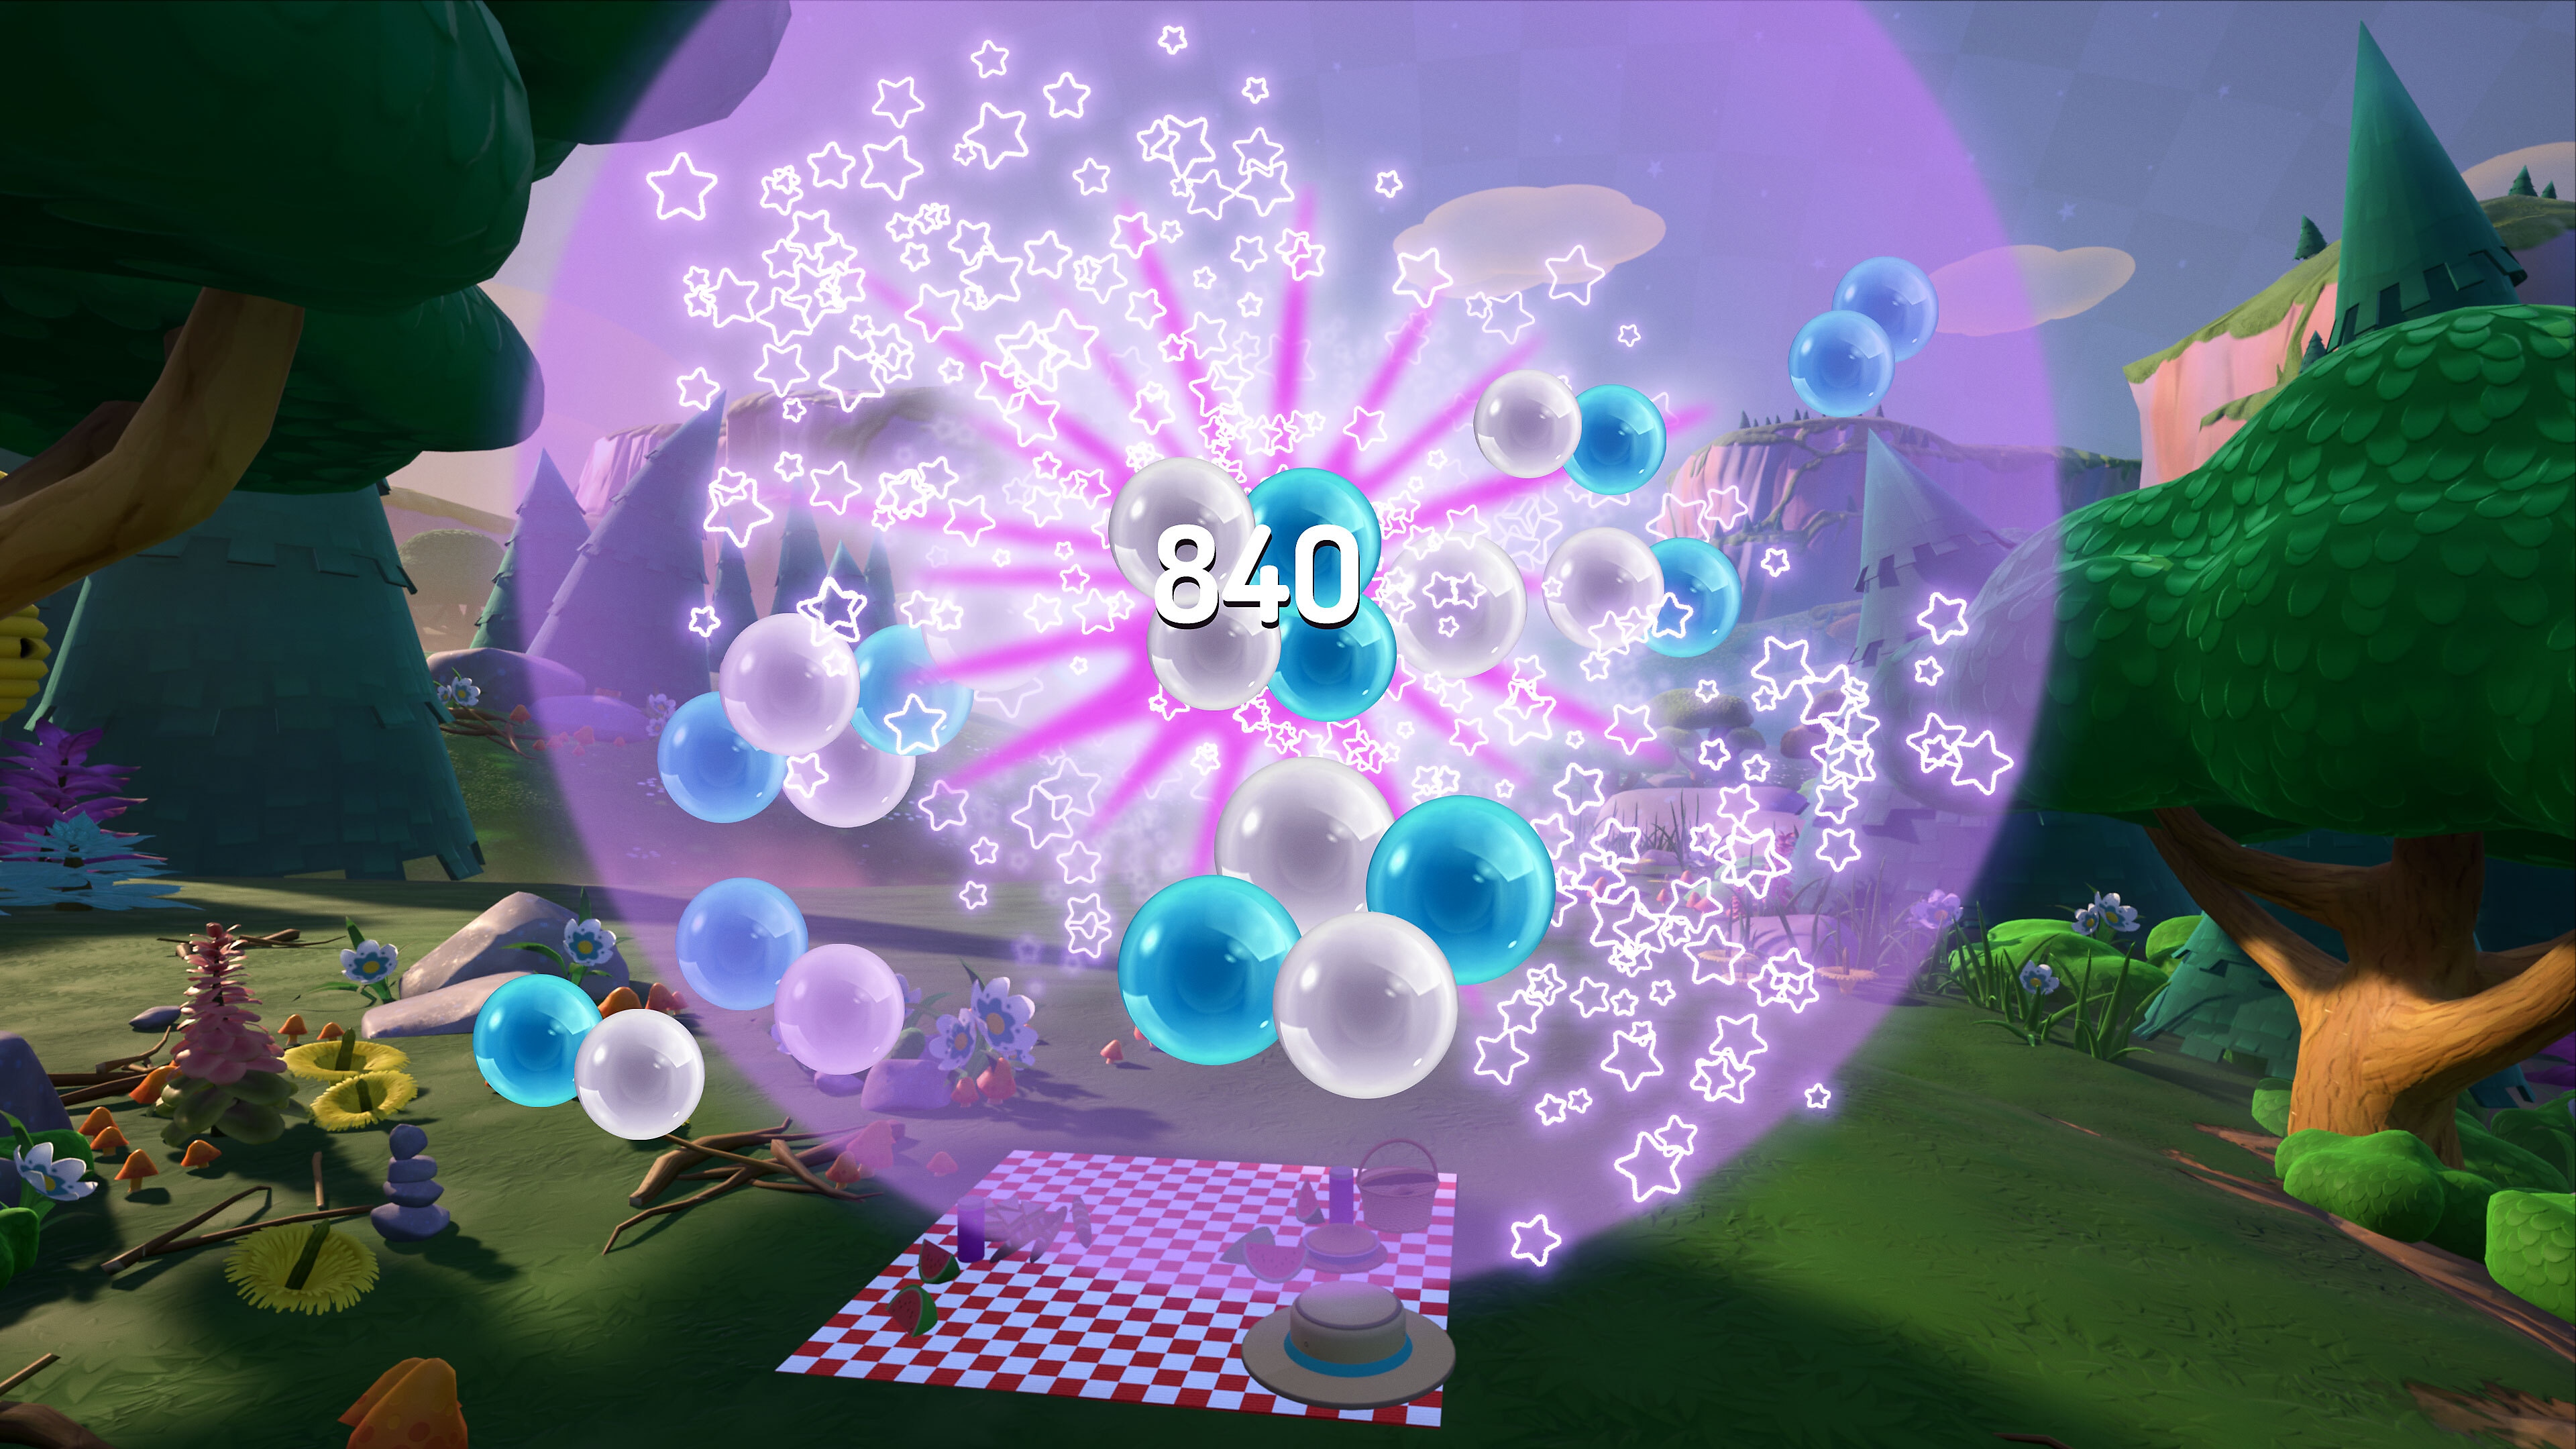 Puzzle Bobble 3D στιγμιότυπο οθόνης αποκάλυψης